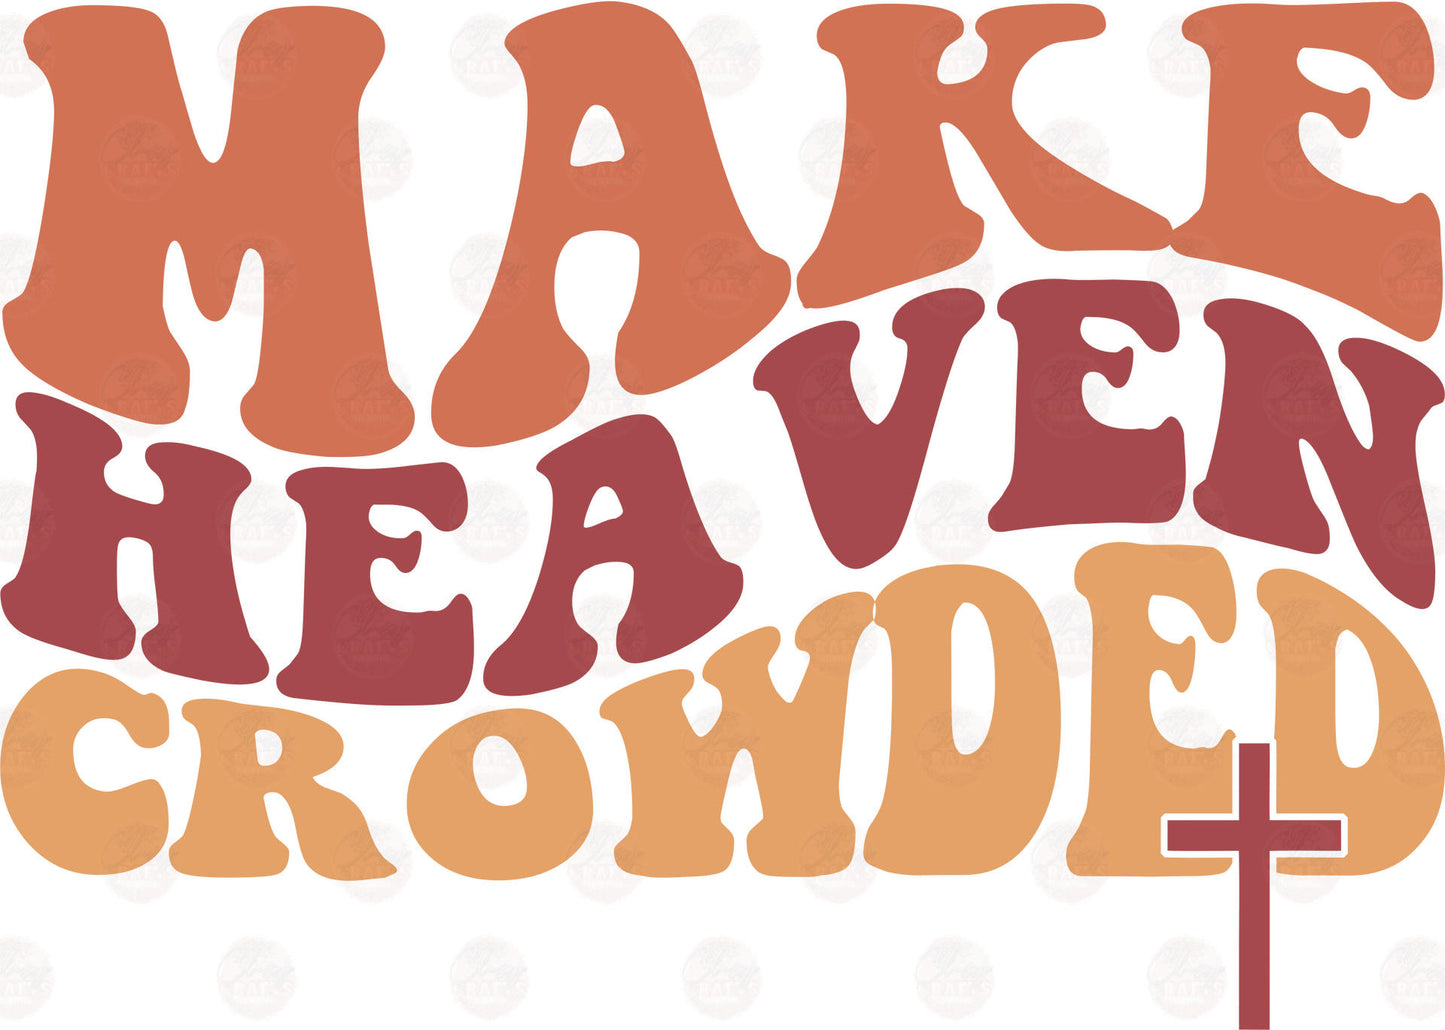 Make Heaven Crowed Retro Transfer